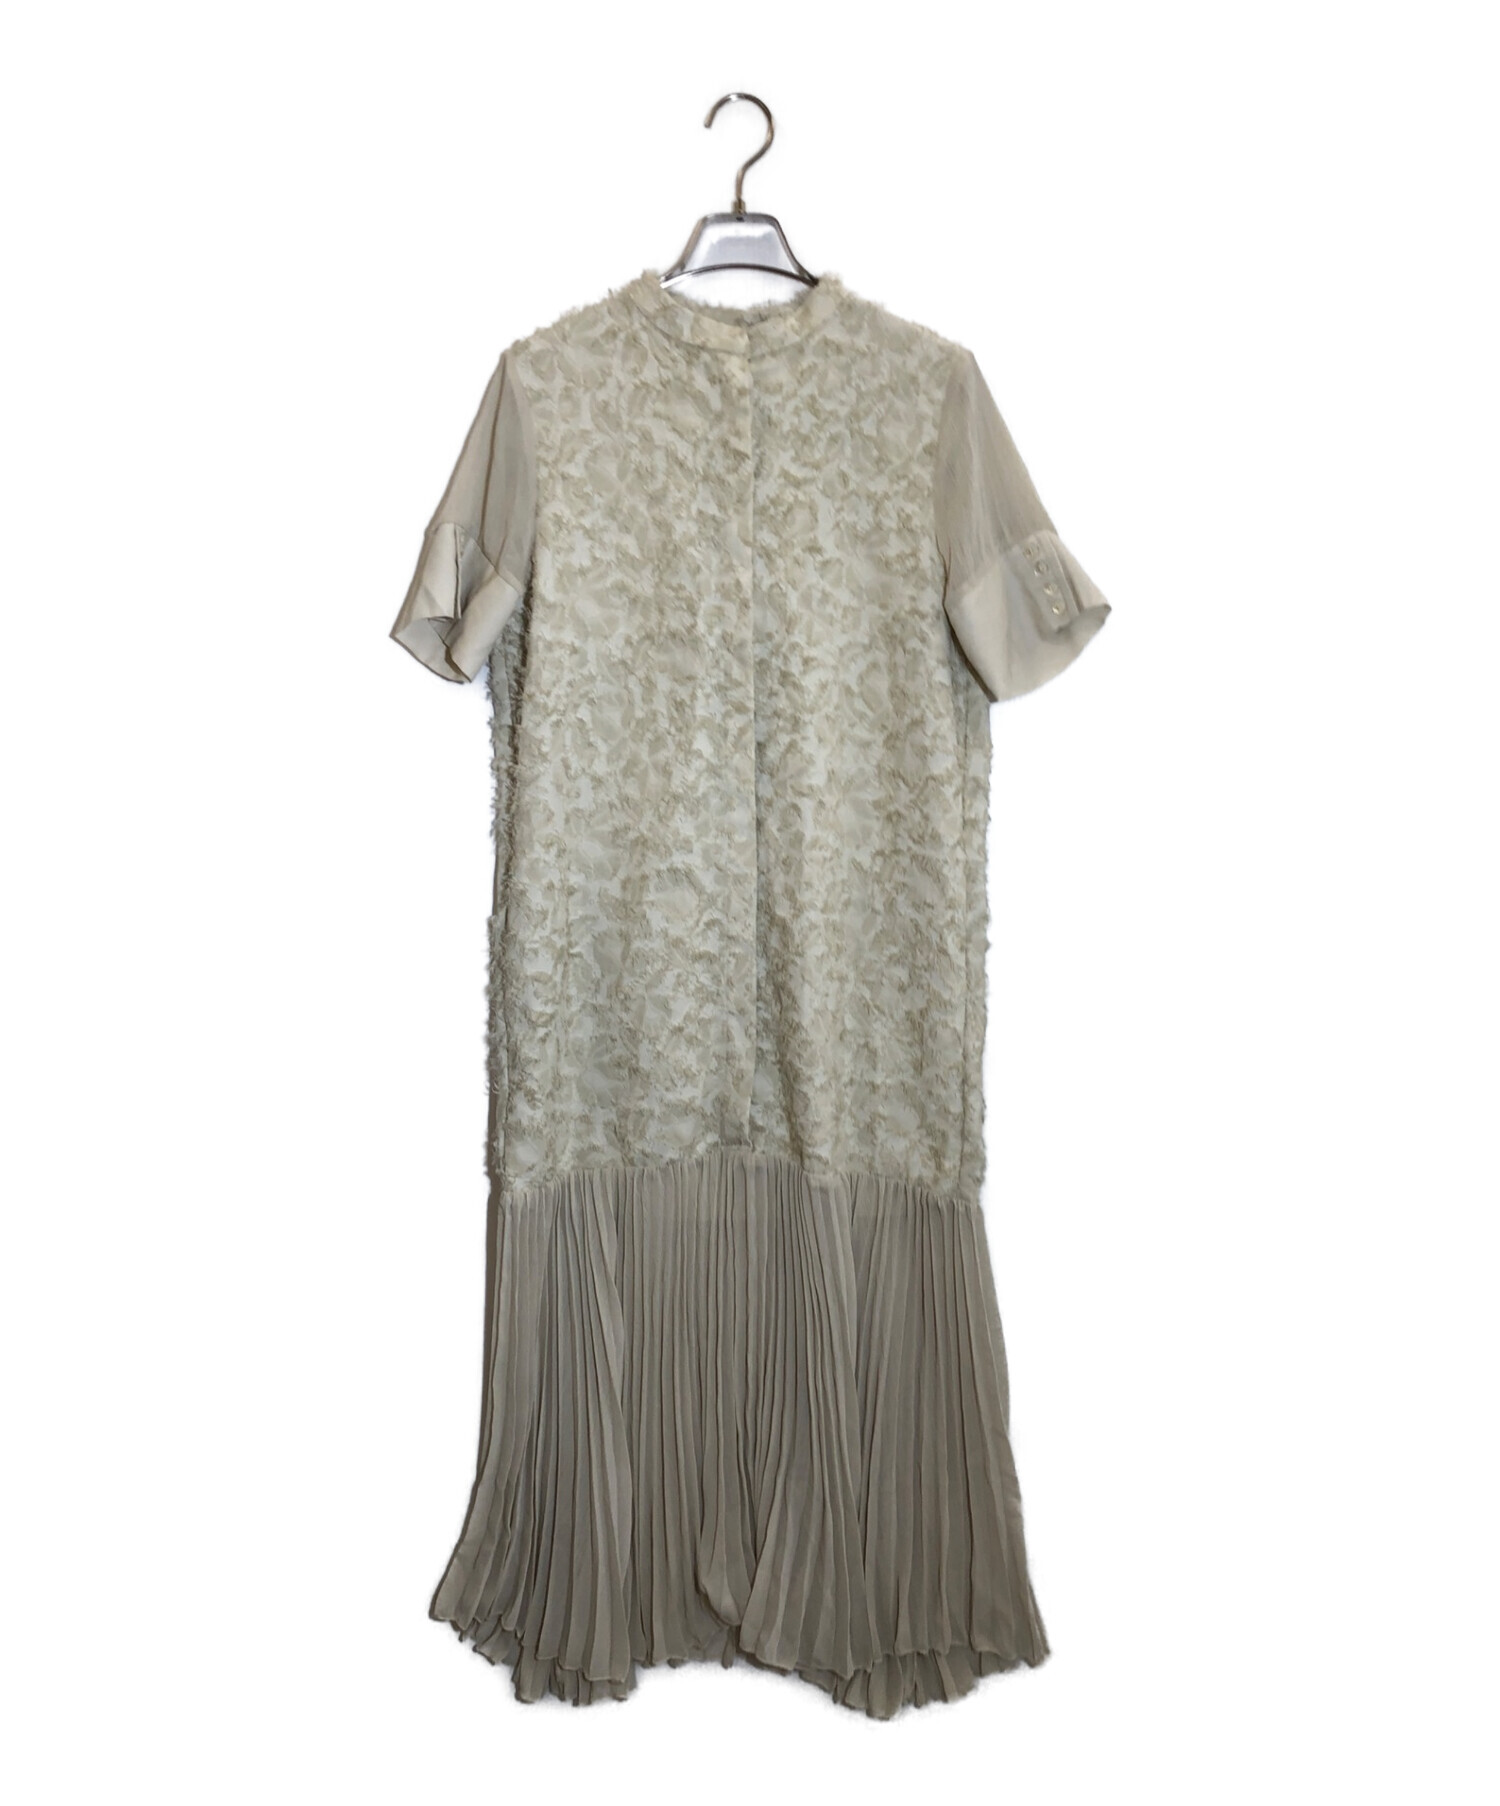 PRIVEVE (プリヴェヴェ) THE 3D JACQUARD DRESS　3Dジャガードドレス ホワイト サイズ:free